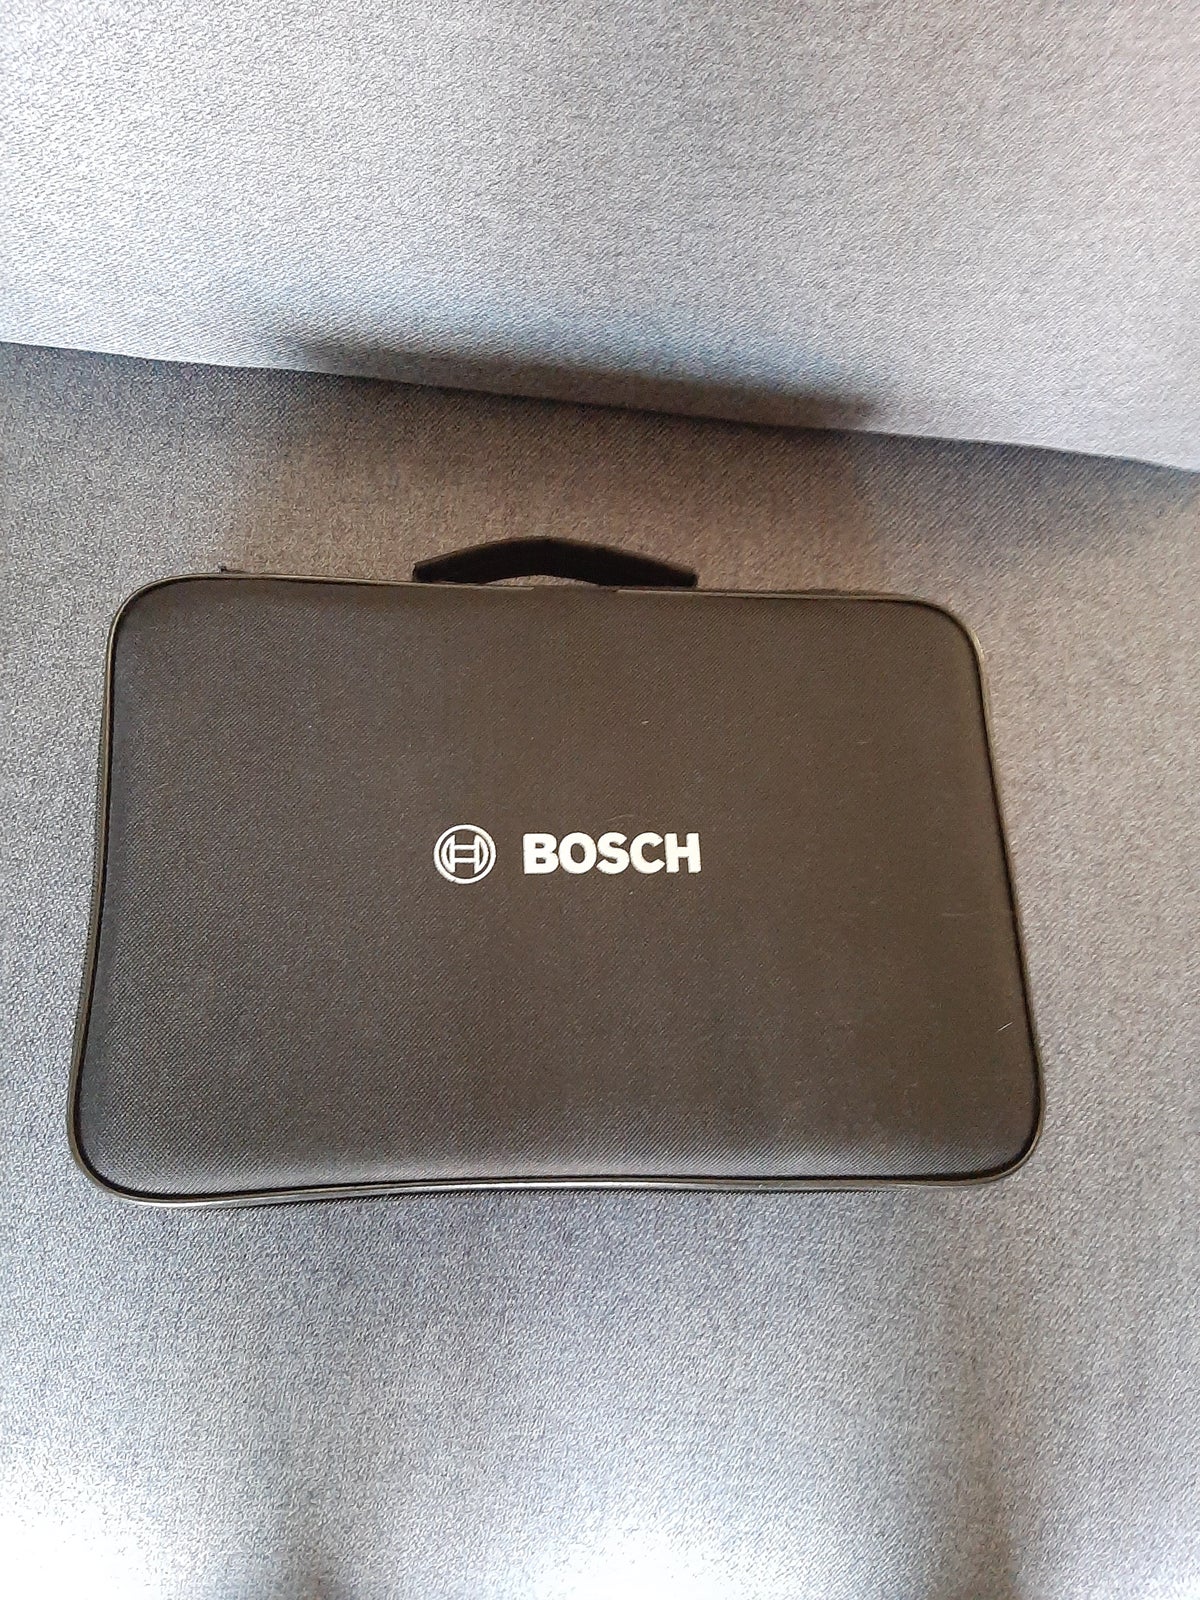 Støvsuger, Bosch serie 2